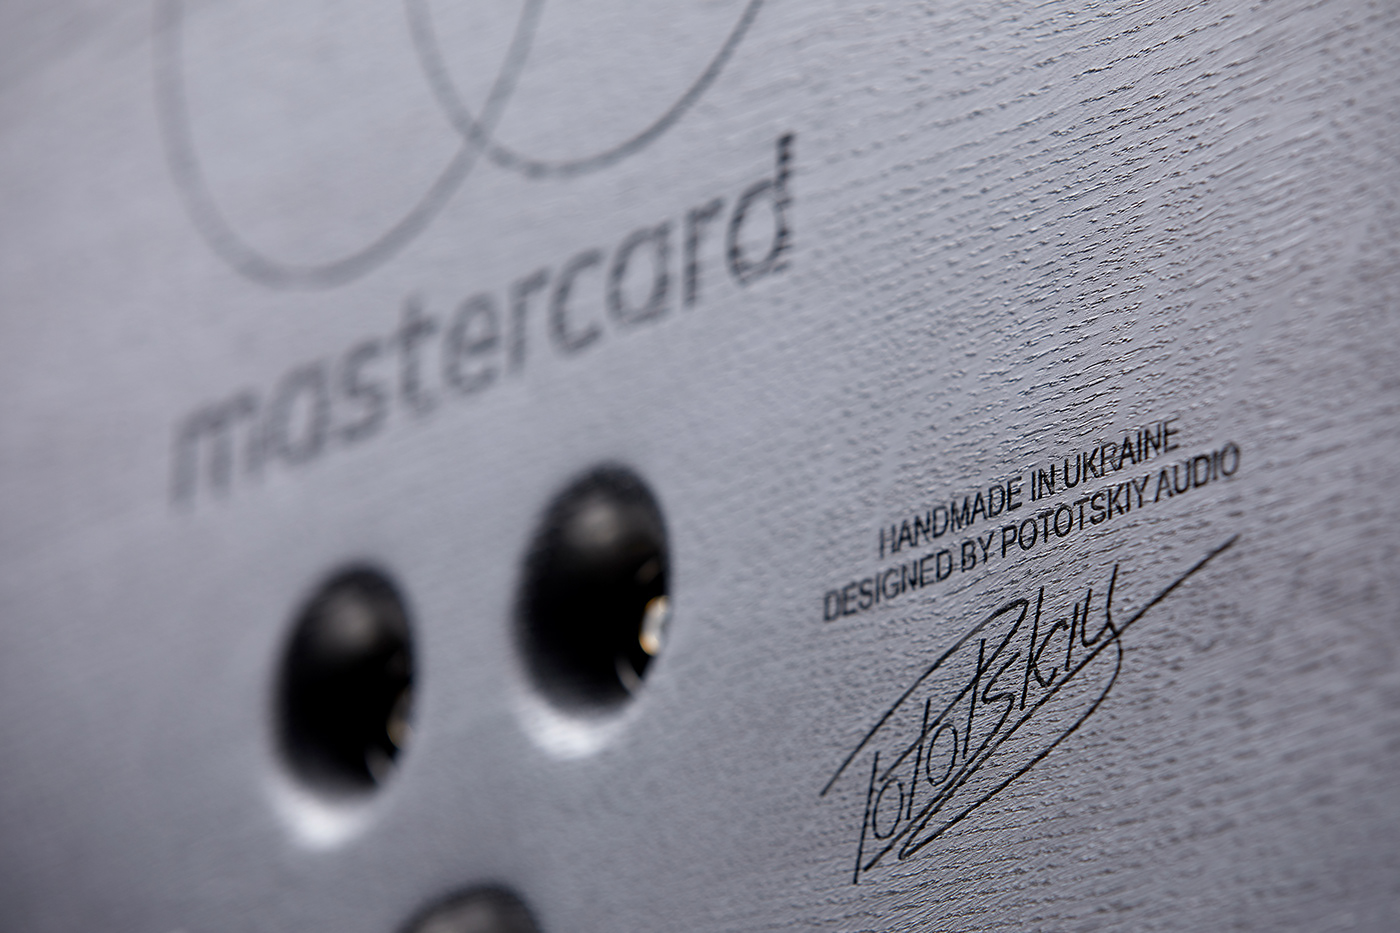 Audio audiosystem handmade industrial design  mastercard music pototskiyaudio sound speaker